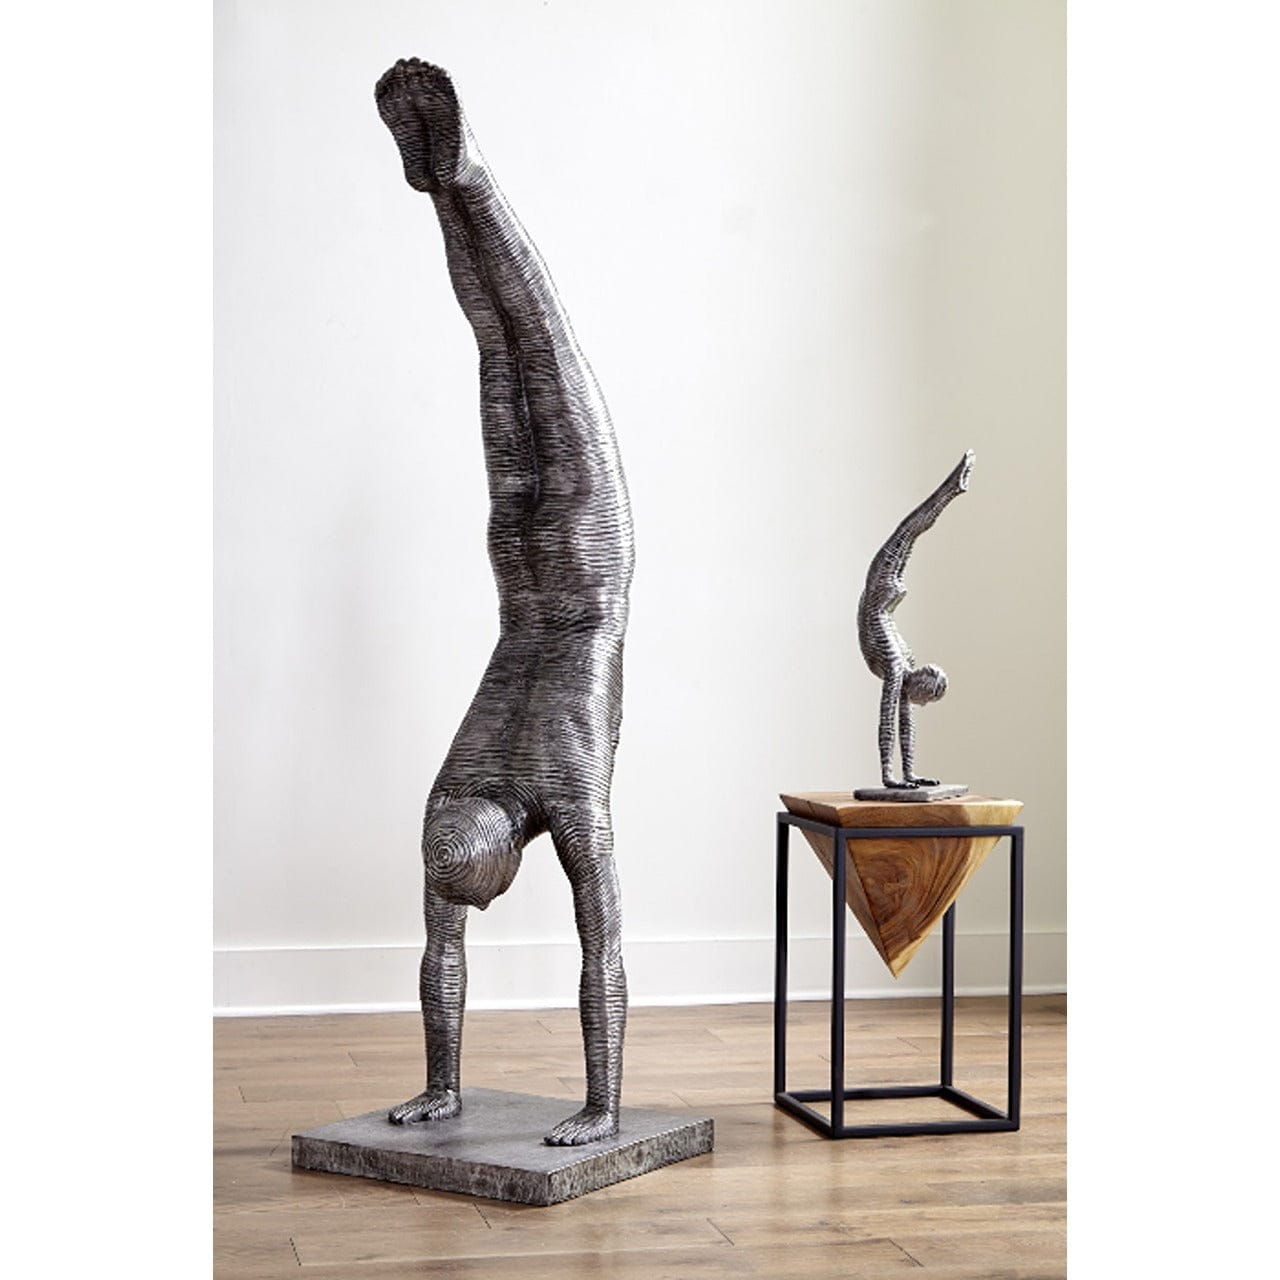 Large Handstand Sculpture